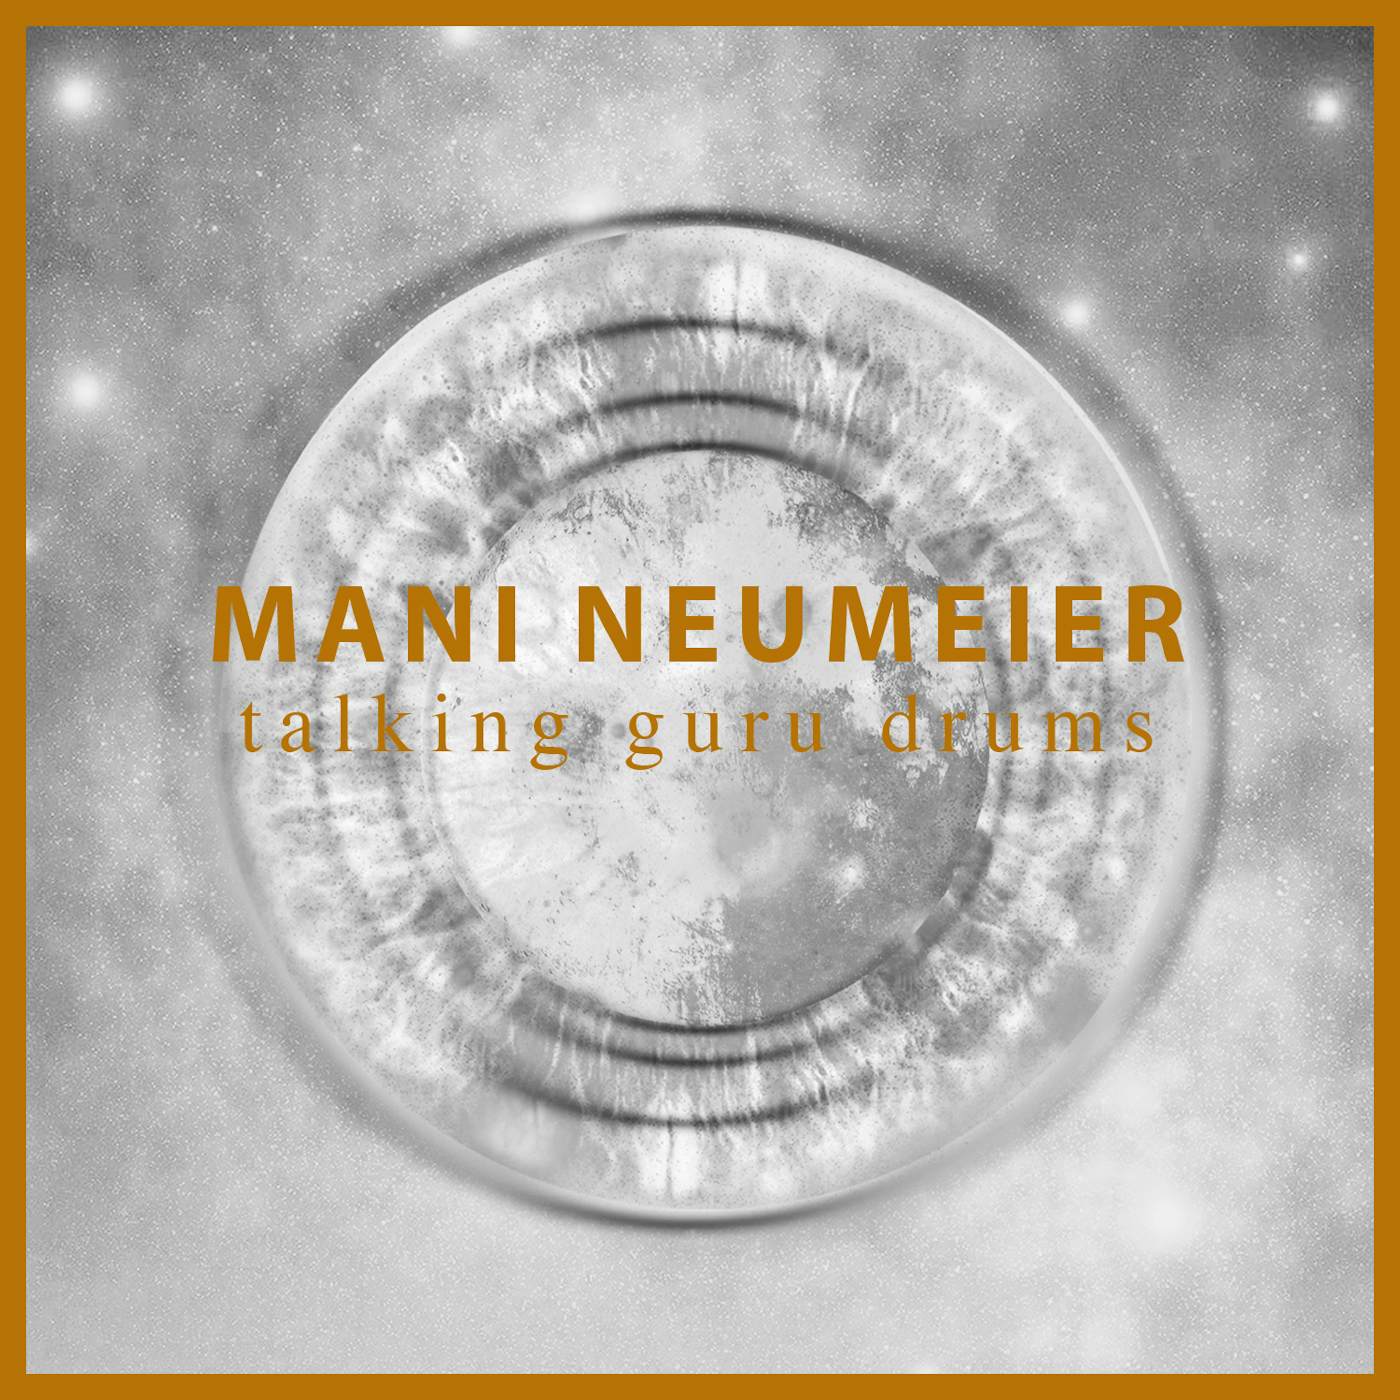 Mani Neumeier Talking Guru Drums Vinyl Record